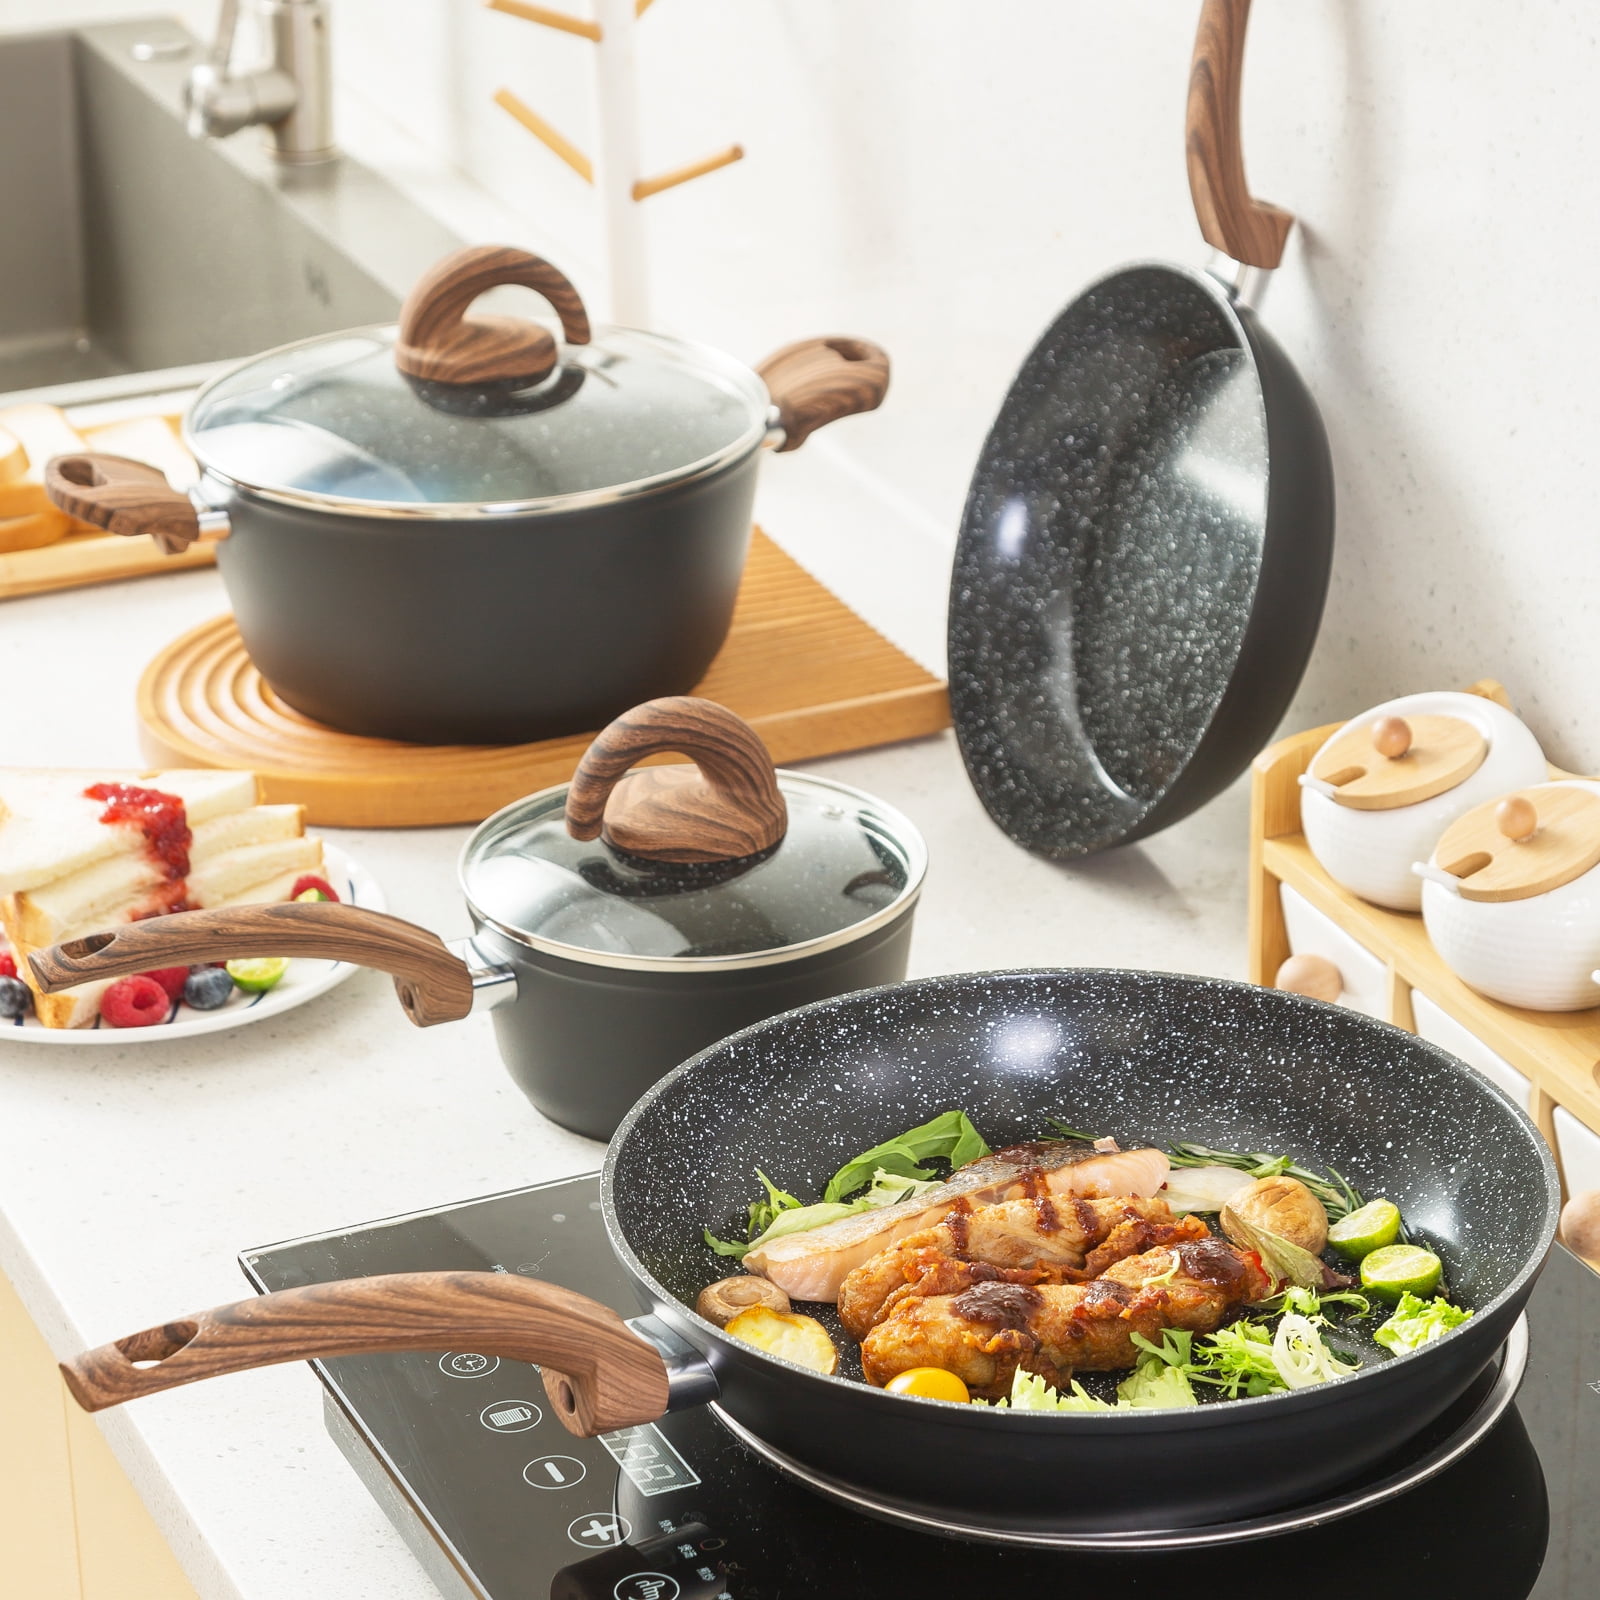 Vkoocy Nonstick Kitchen Cookware Set, Pots and Pans Set Healthy